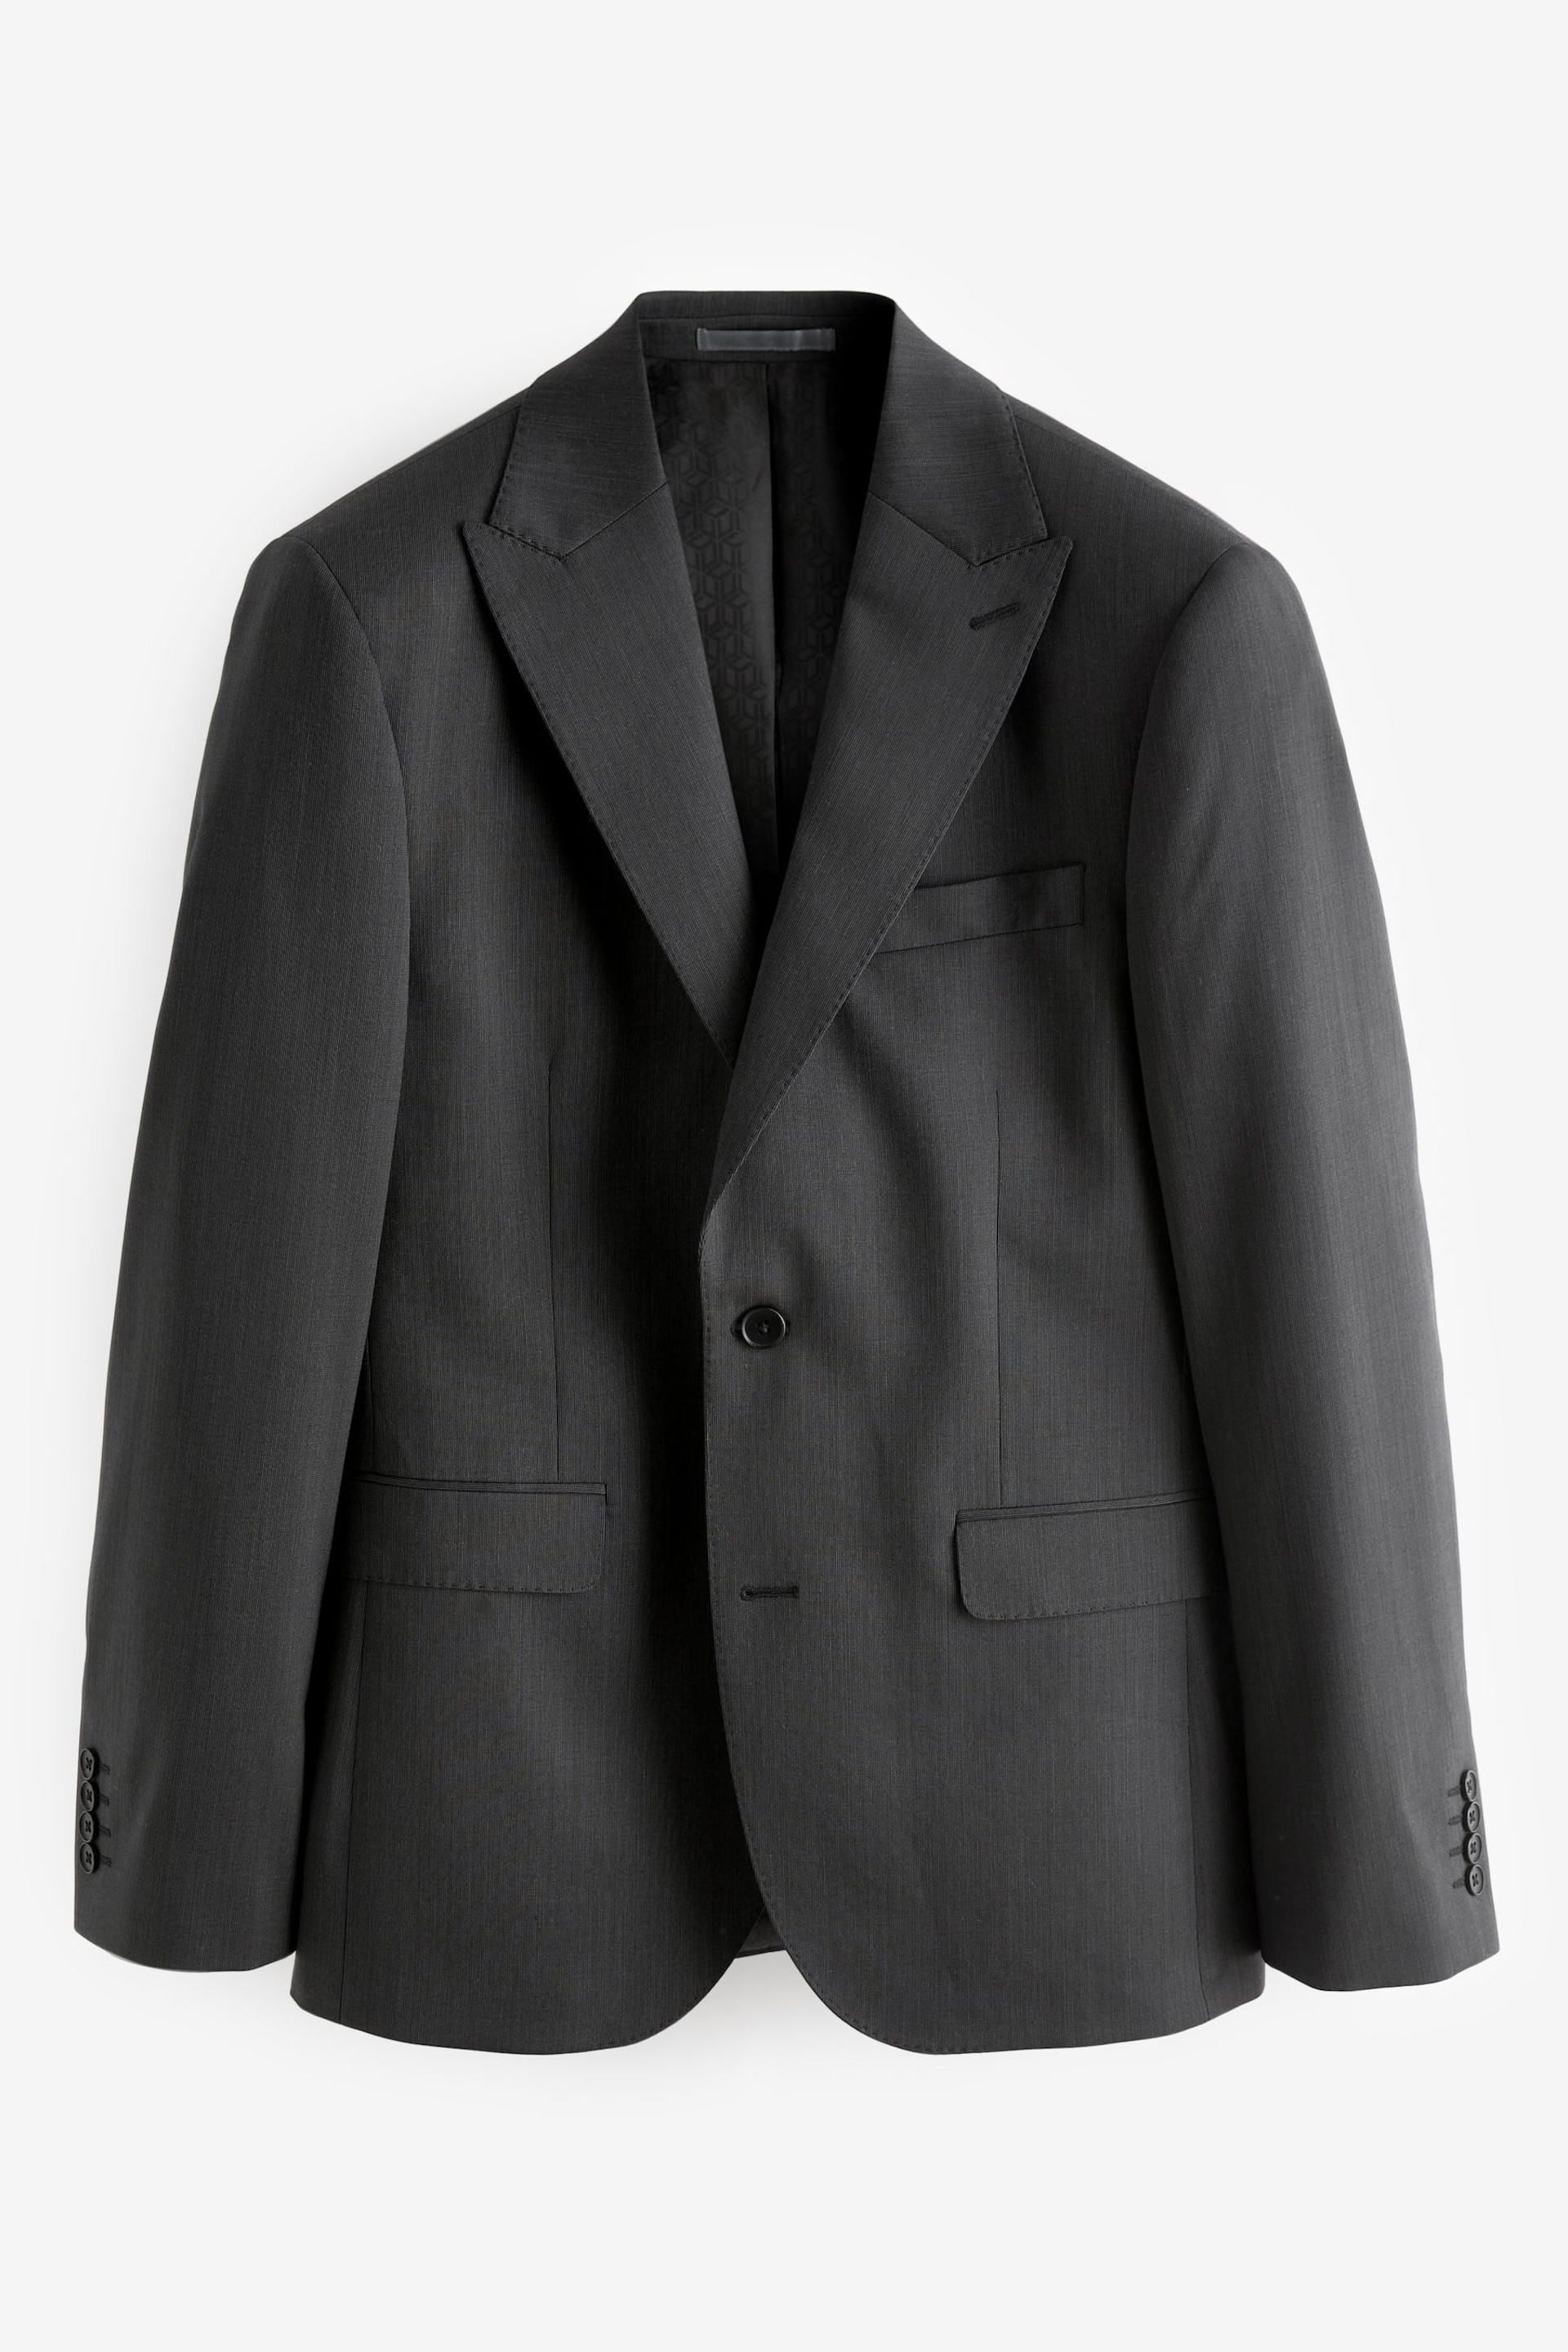 Charcoal Grey Slim Fit Wool Blend Suit Jacket - Image 7 of 11